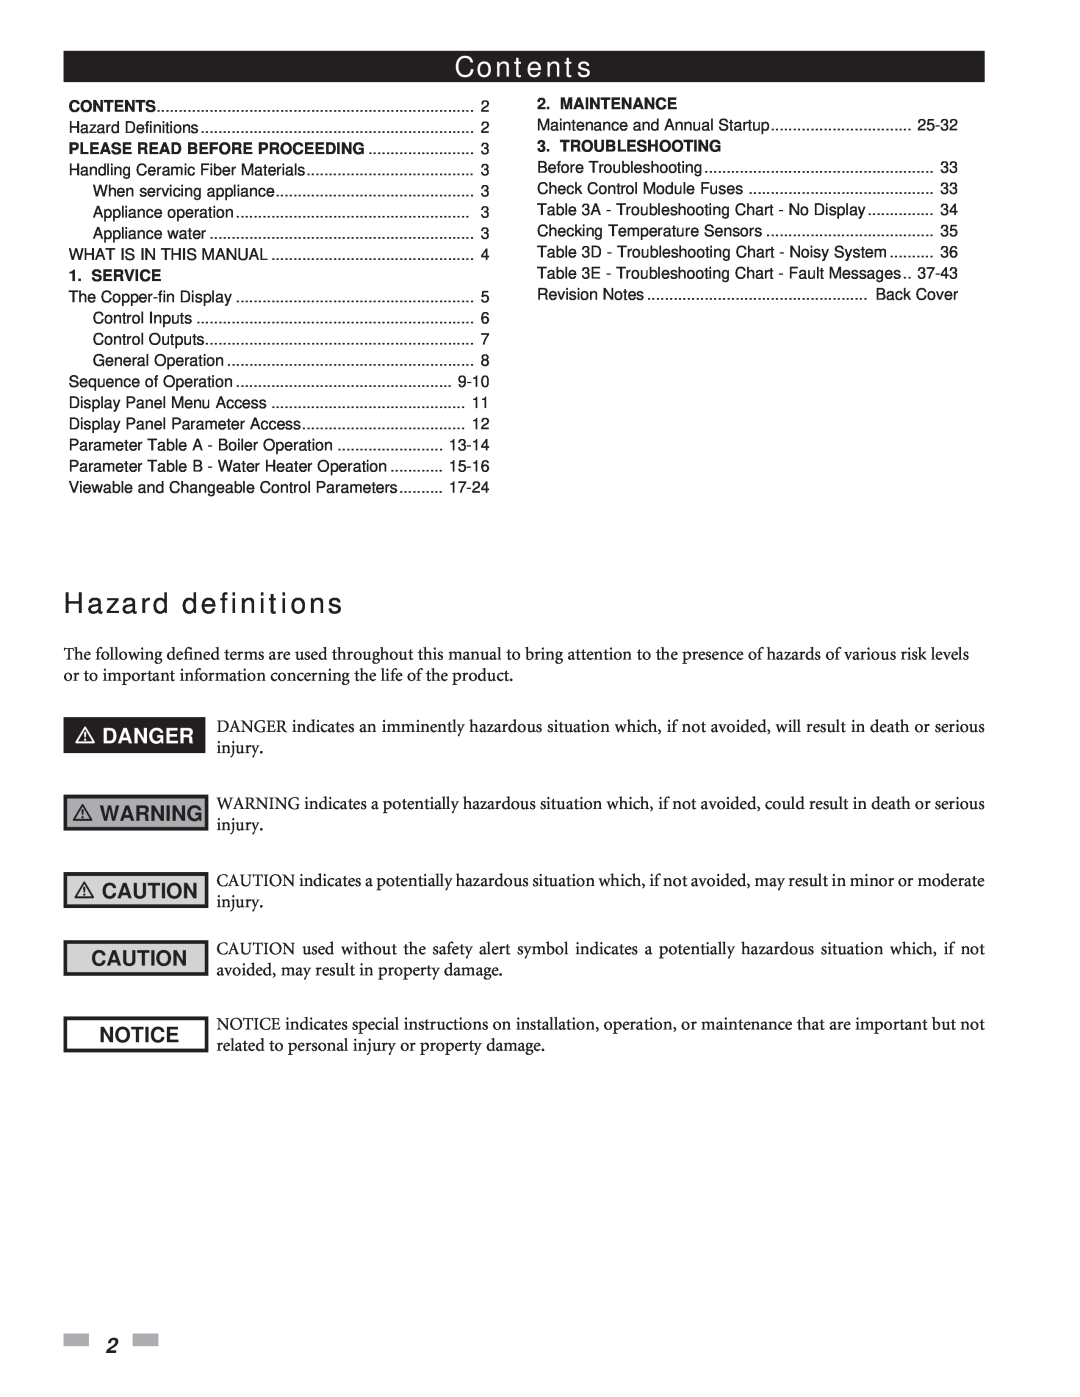 Lochinvar 402 - 2072 service manual Hazard definitions, Danger, Contents 